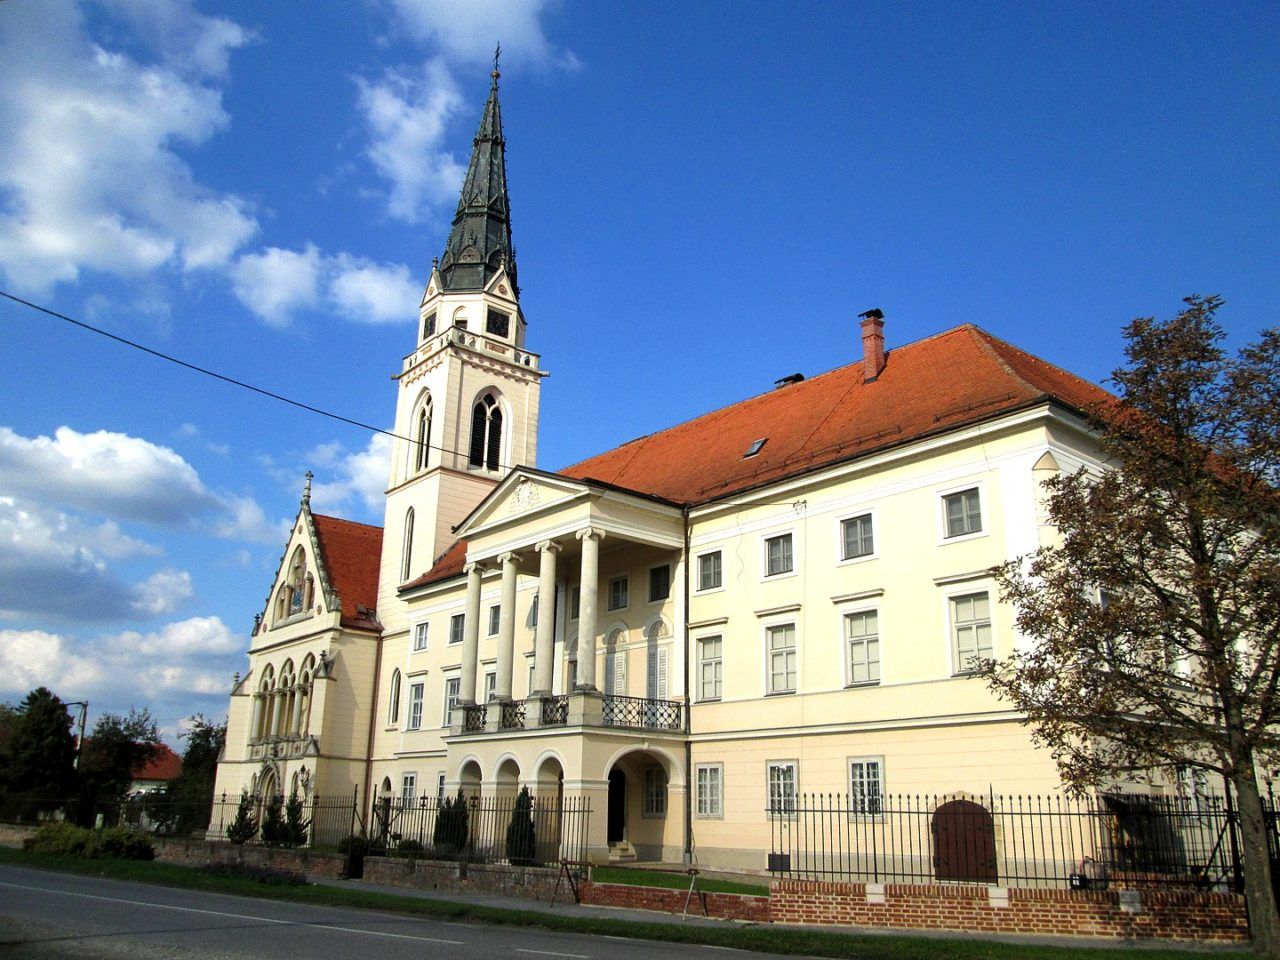 Grkokatolička katedrala Svetog Trojstva u Križevcima/Foto: Fraxinus, CC BY-SA 4.0/Wikimedia Commons